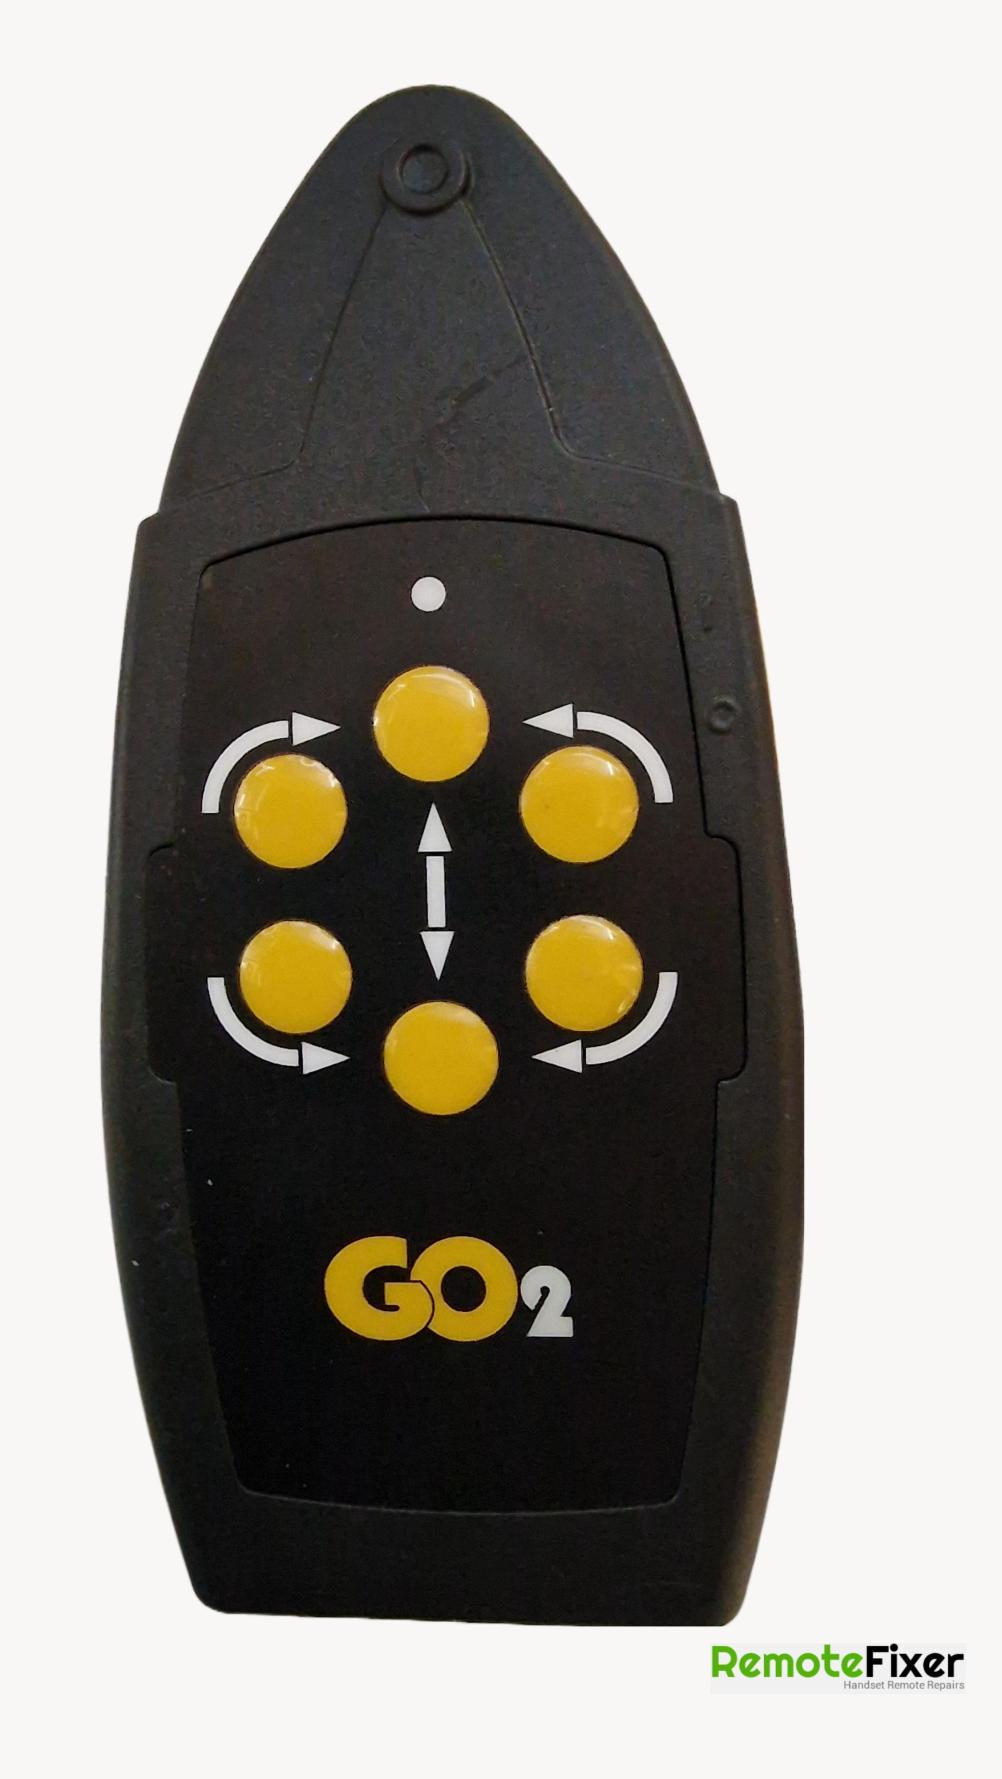 Go 2  Remote Control - Front Image